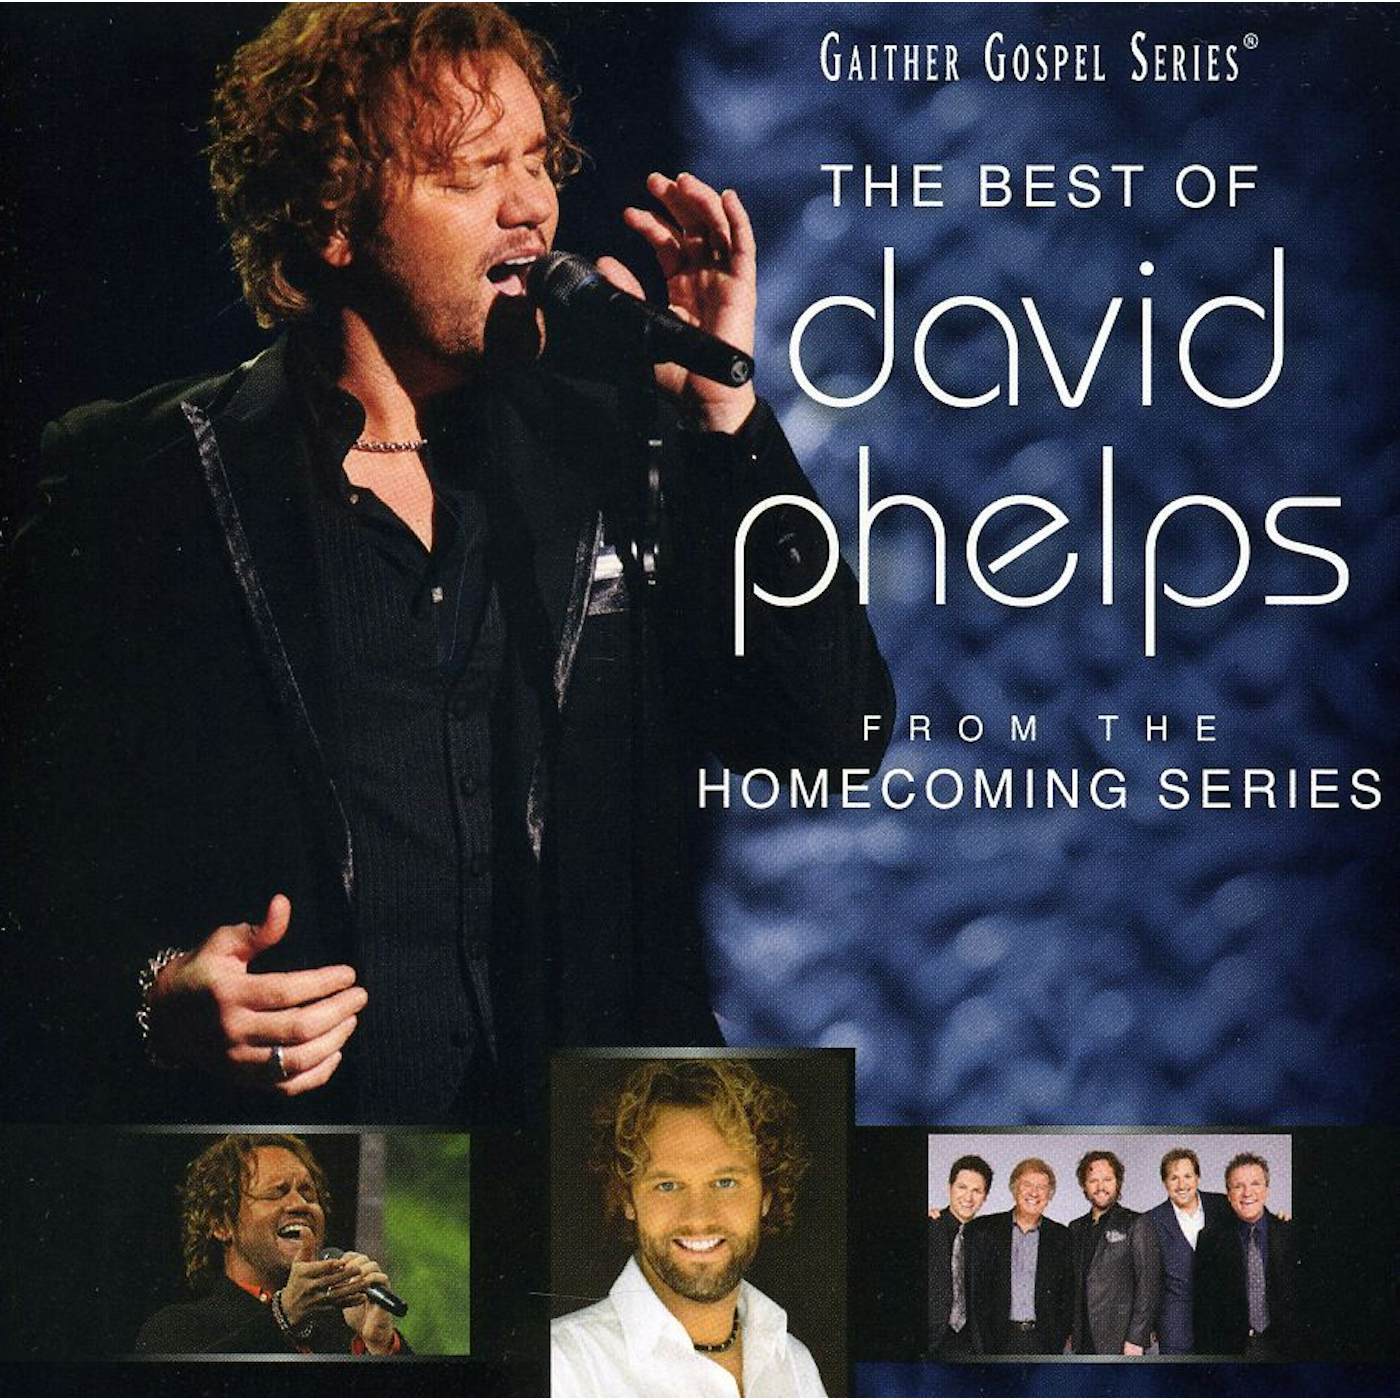 BEST OF DAVID PHELPS CD